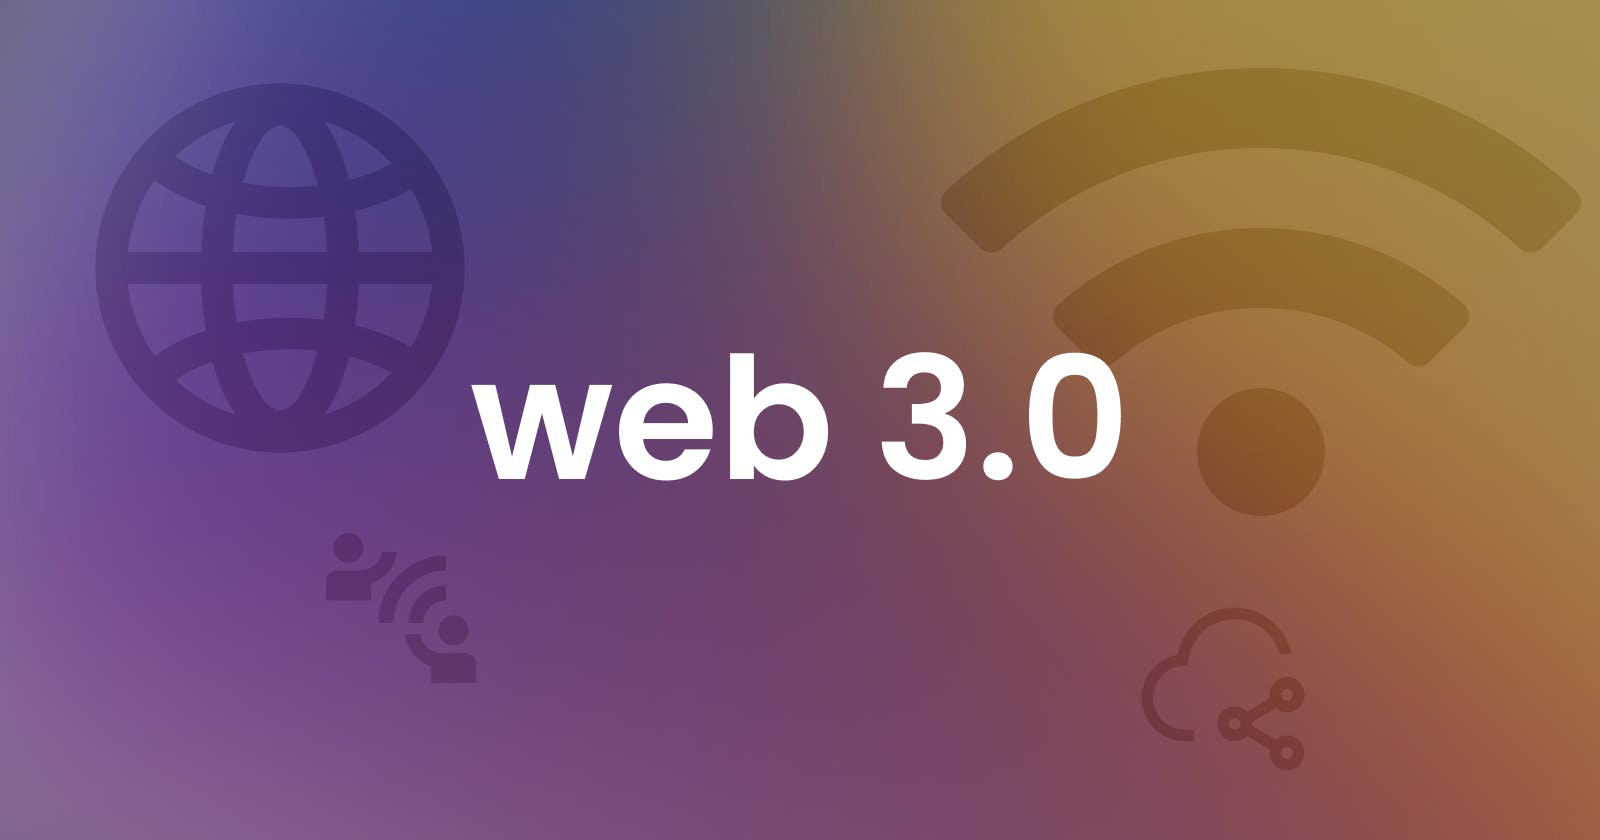 Web 3.0 > Web 2.0?